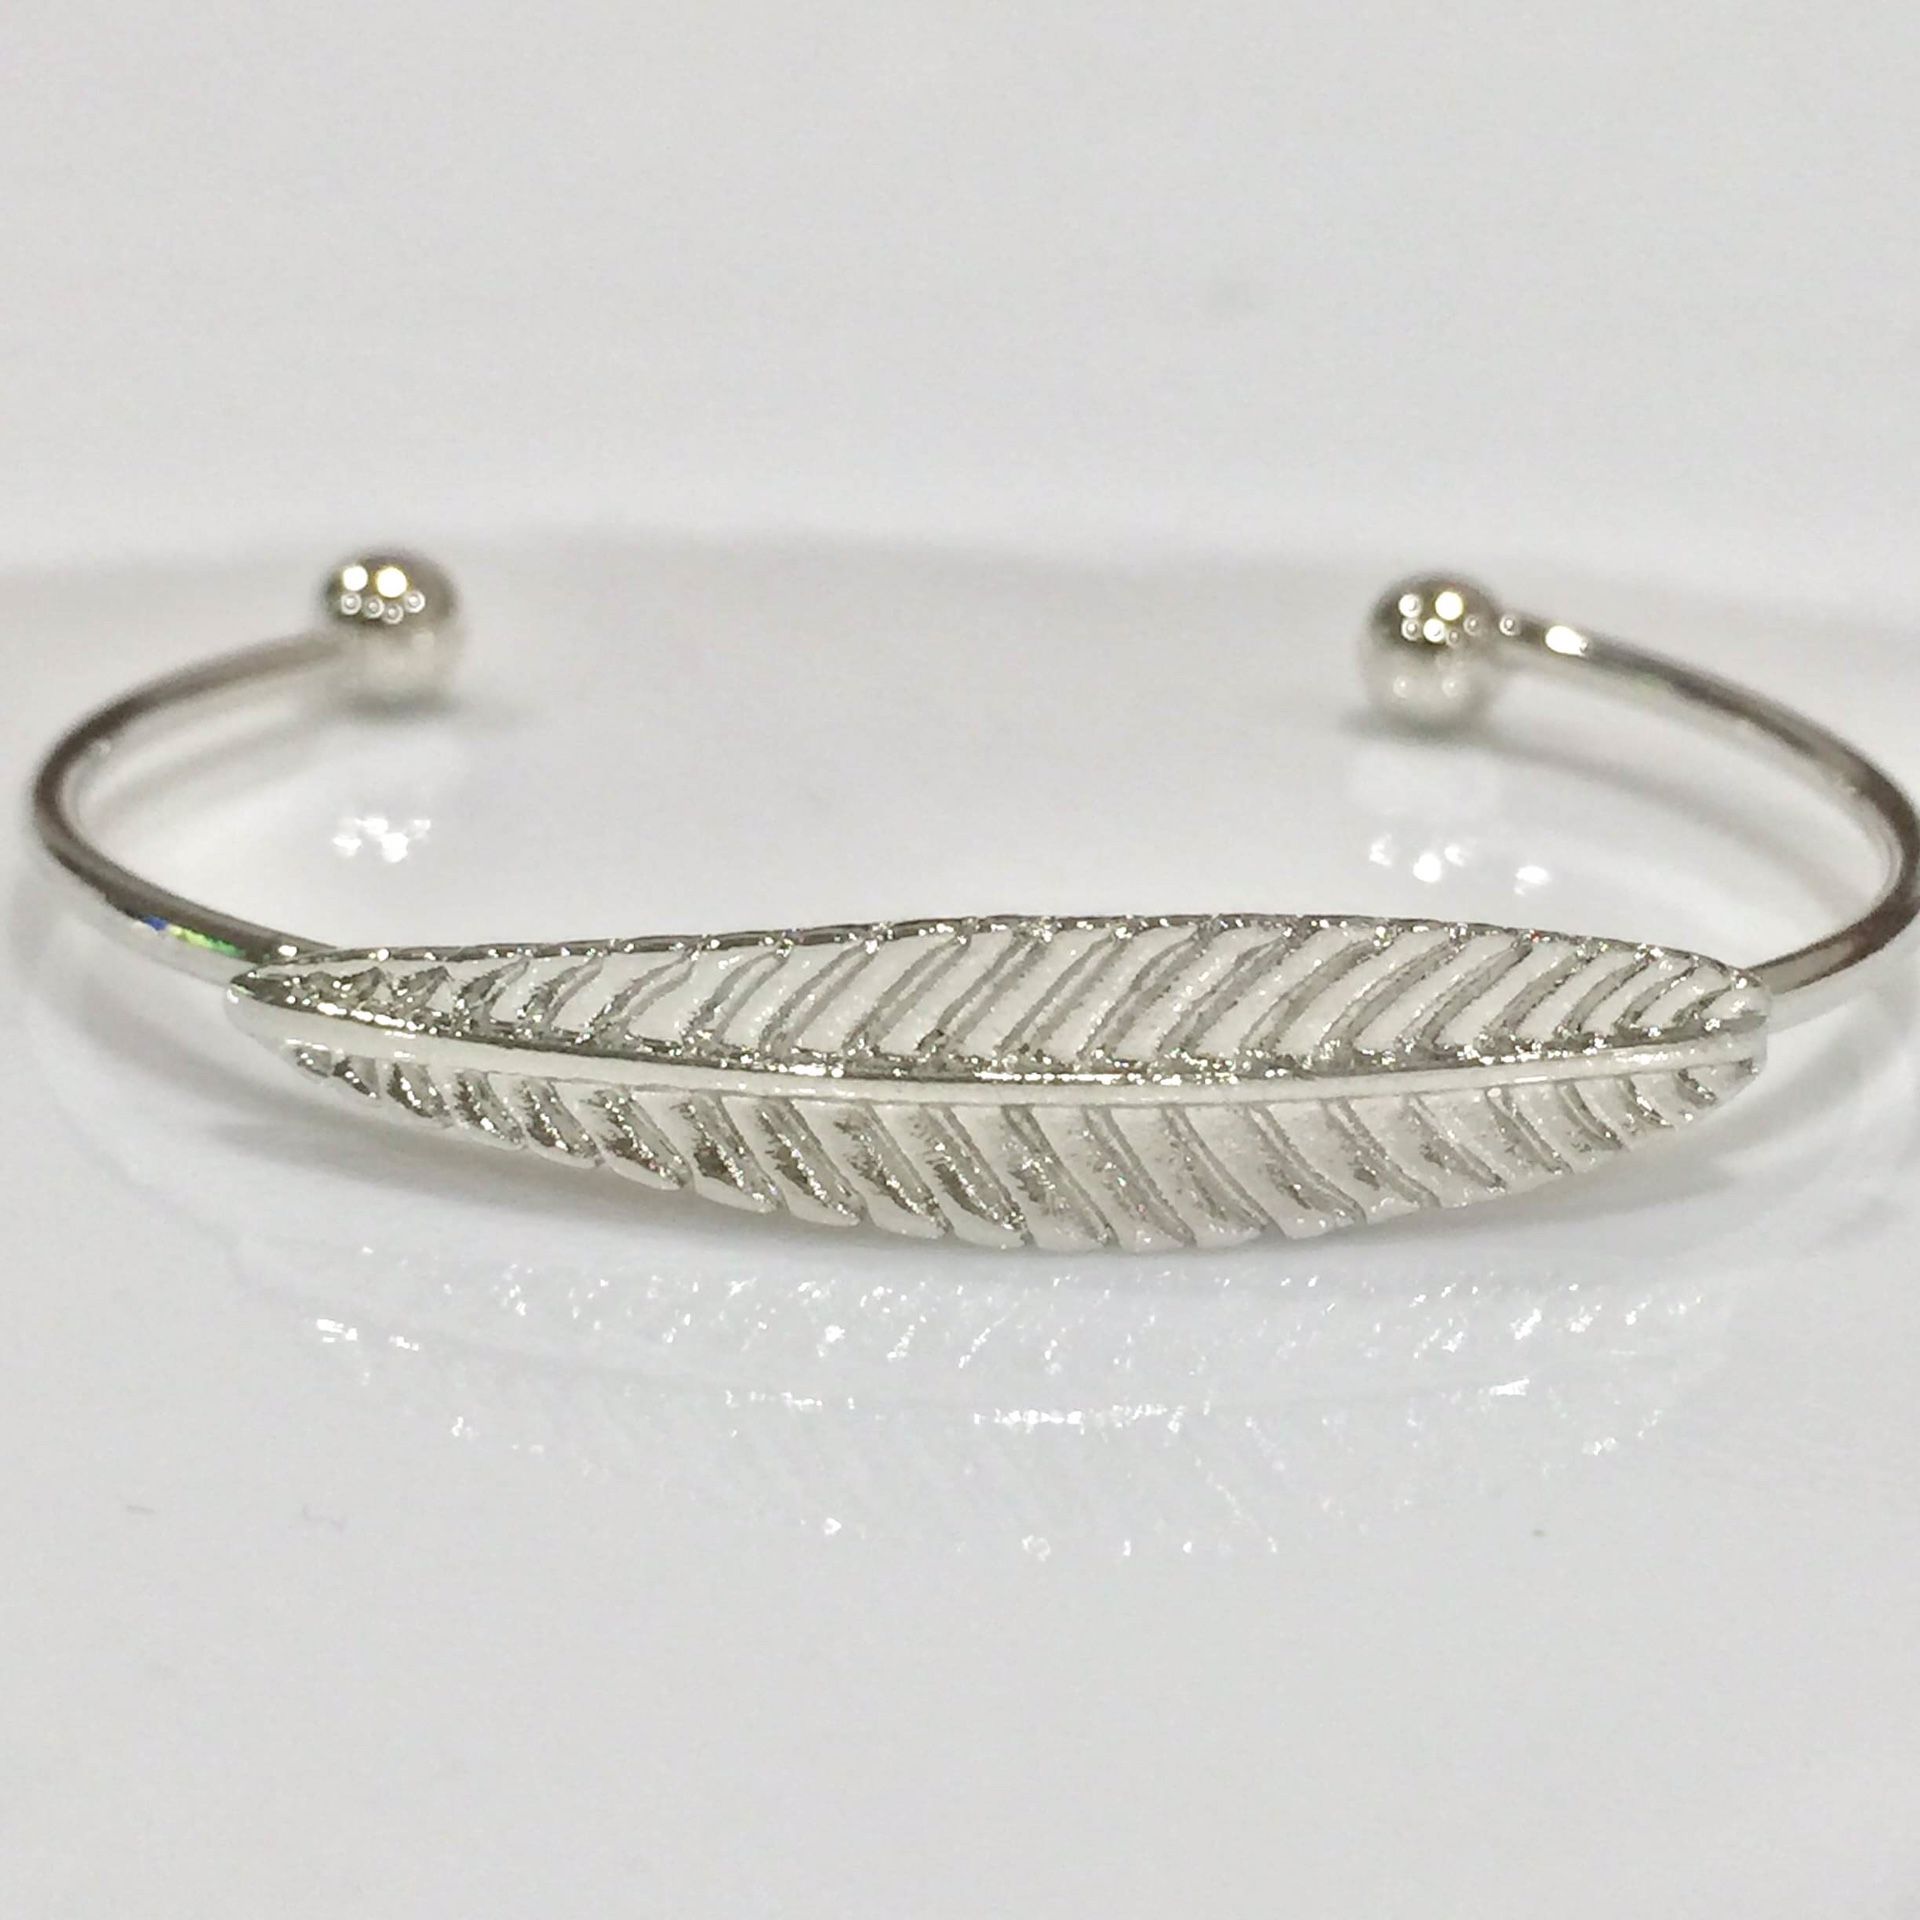 Sterling silver plated cuff leaf bangle bracelet